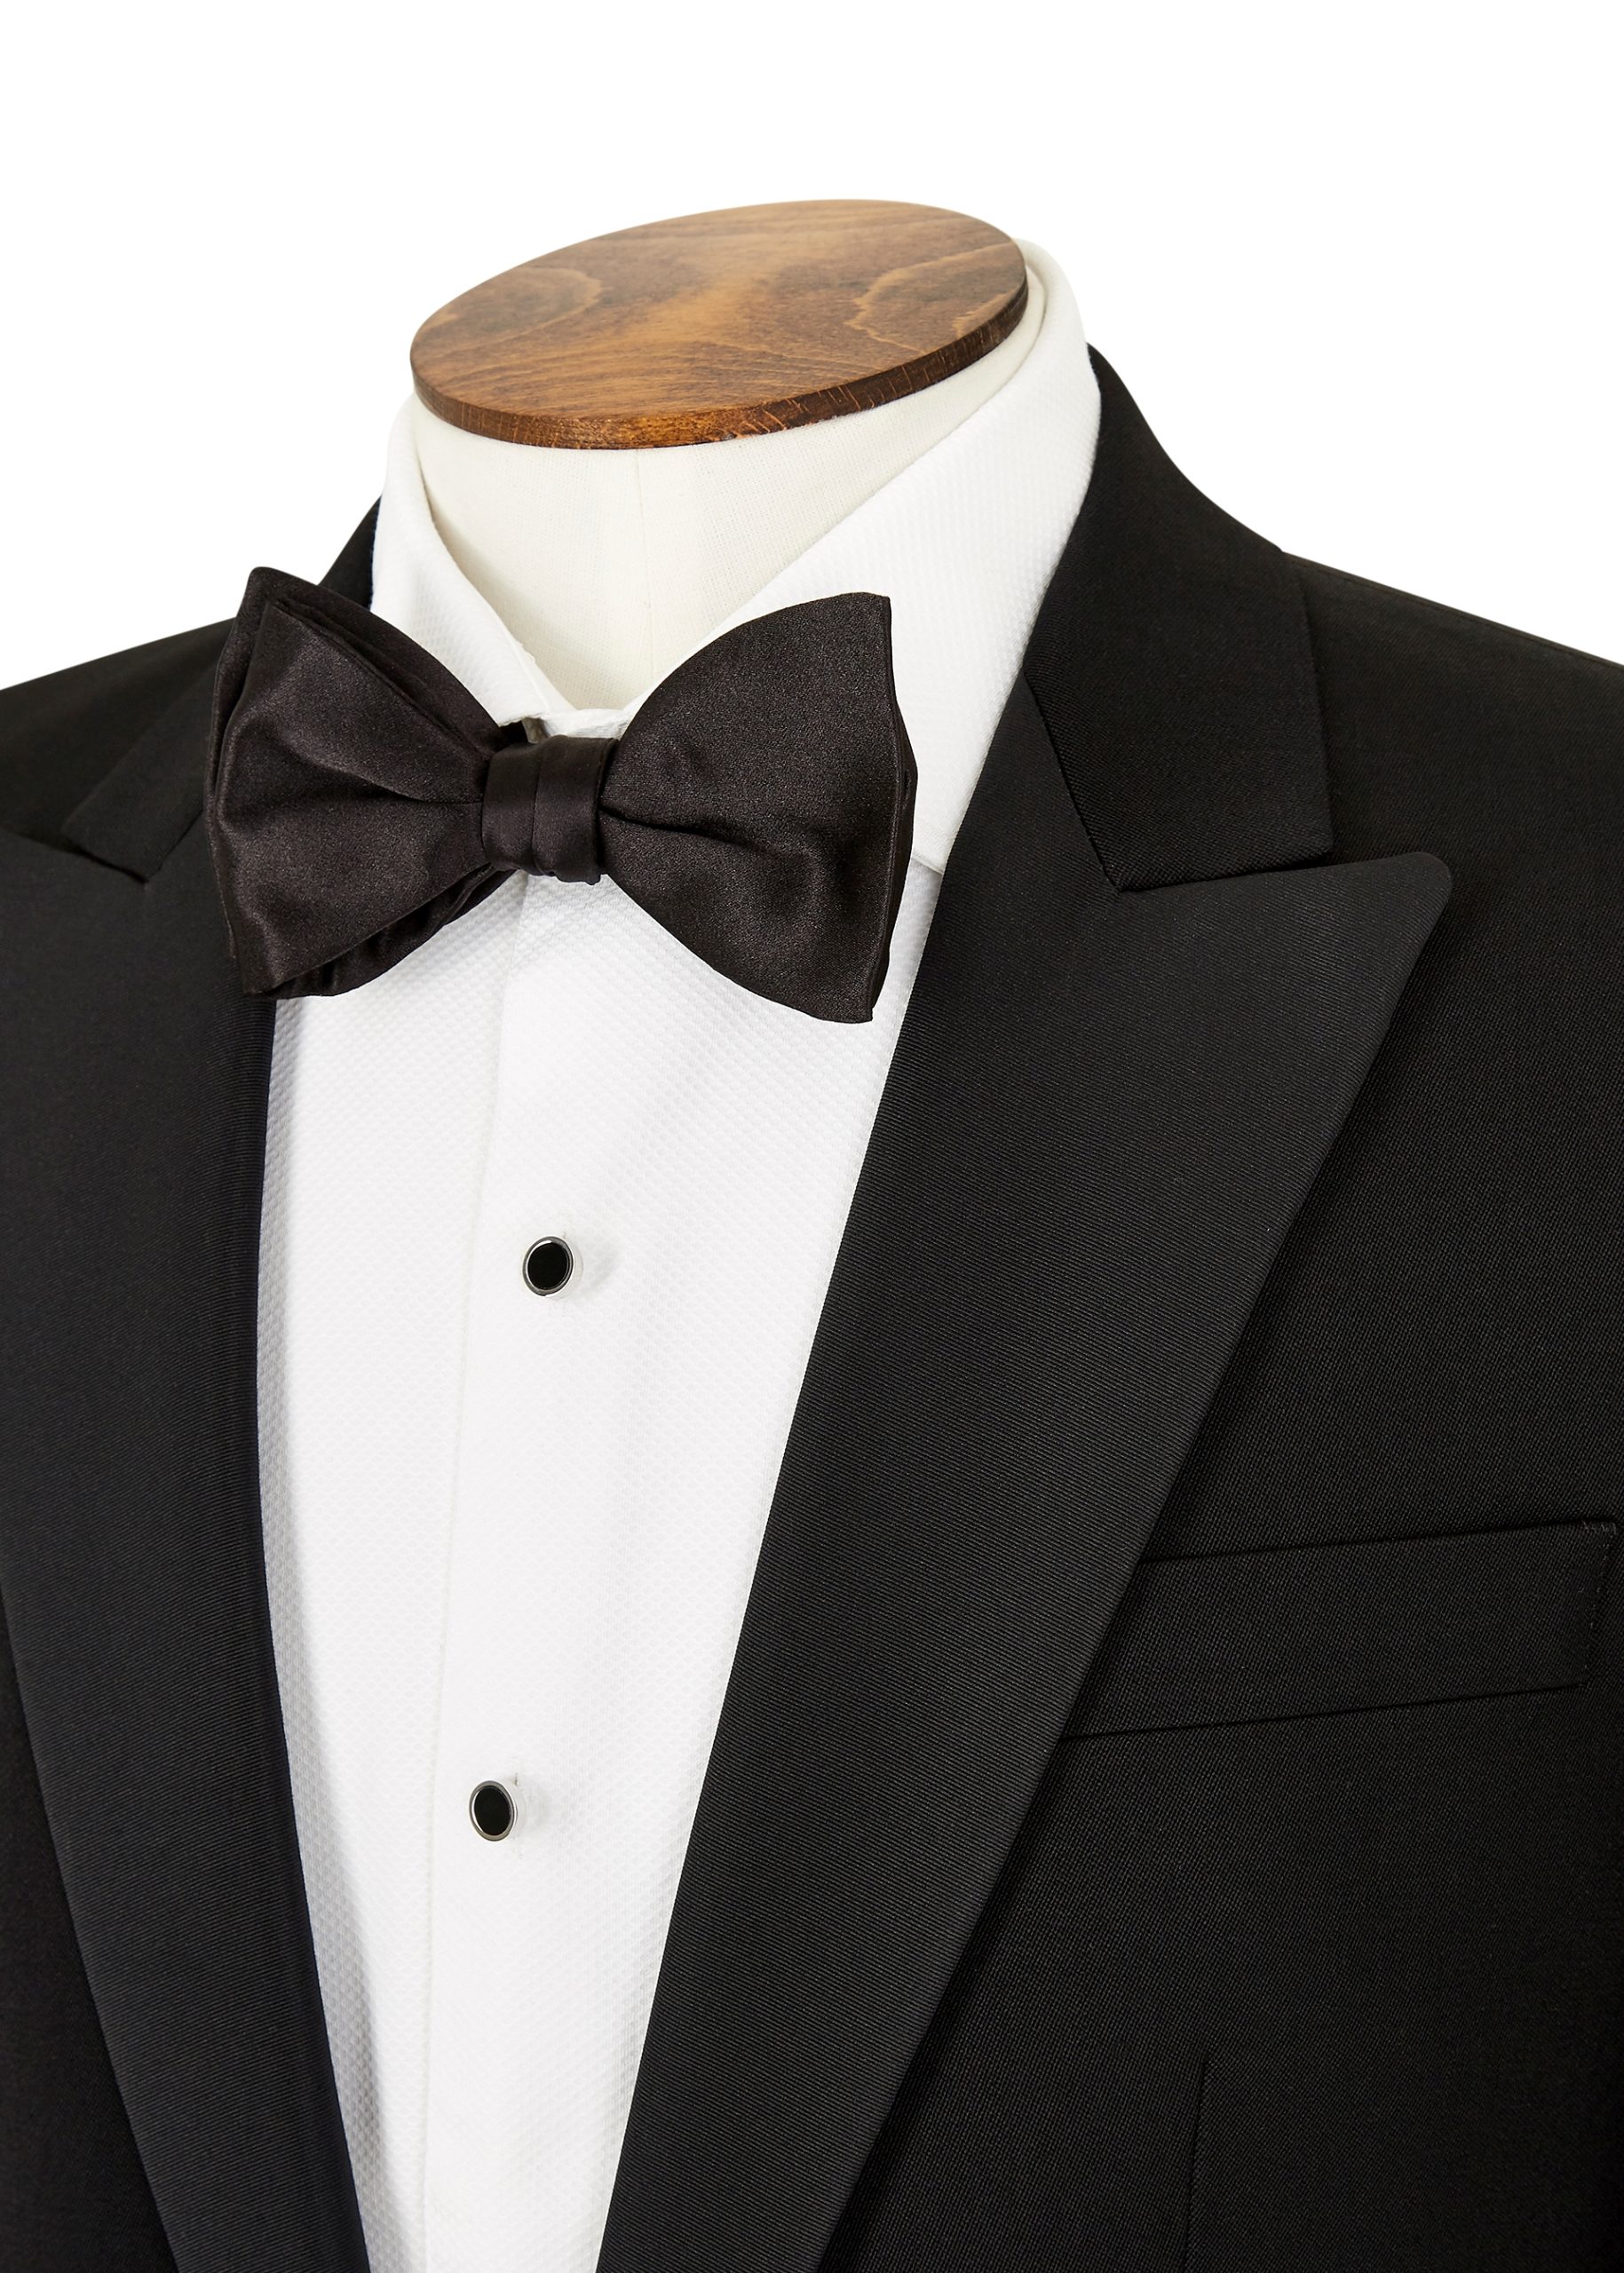 Men’s formal dinner suit by Roderick Charles